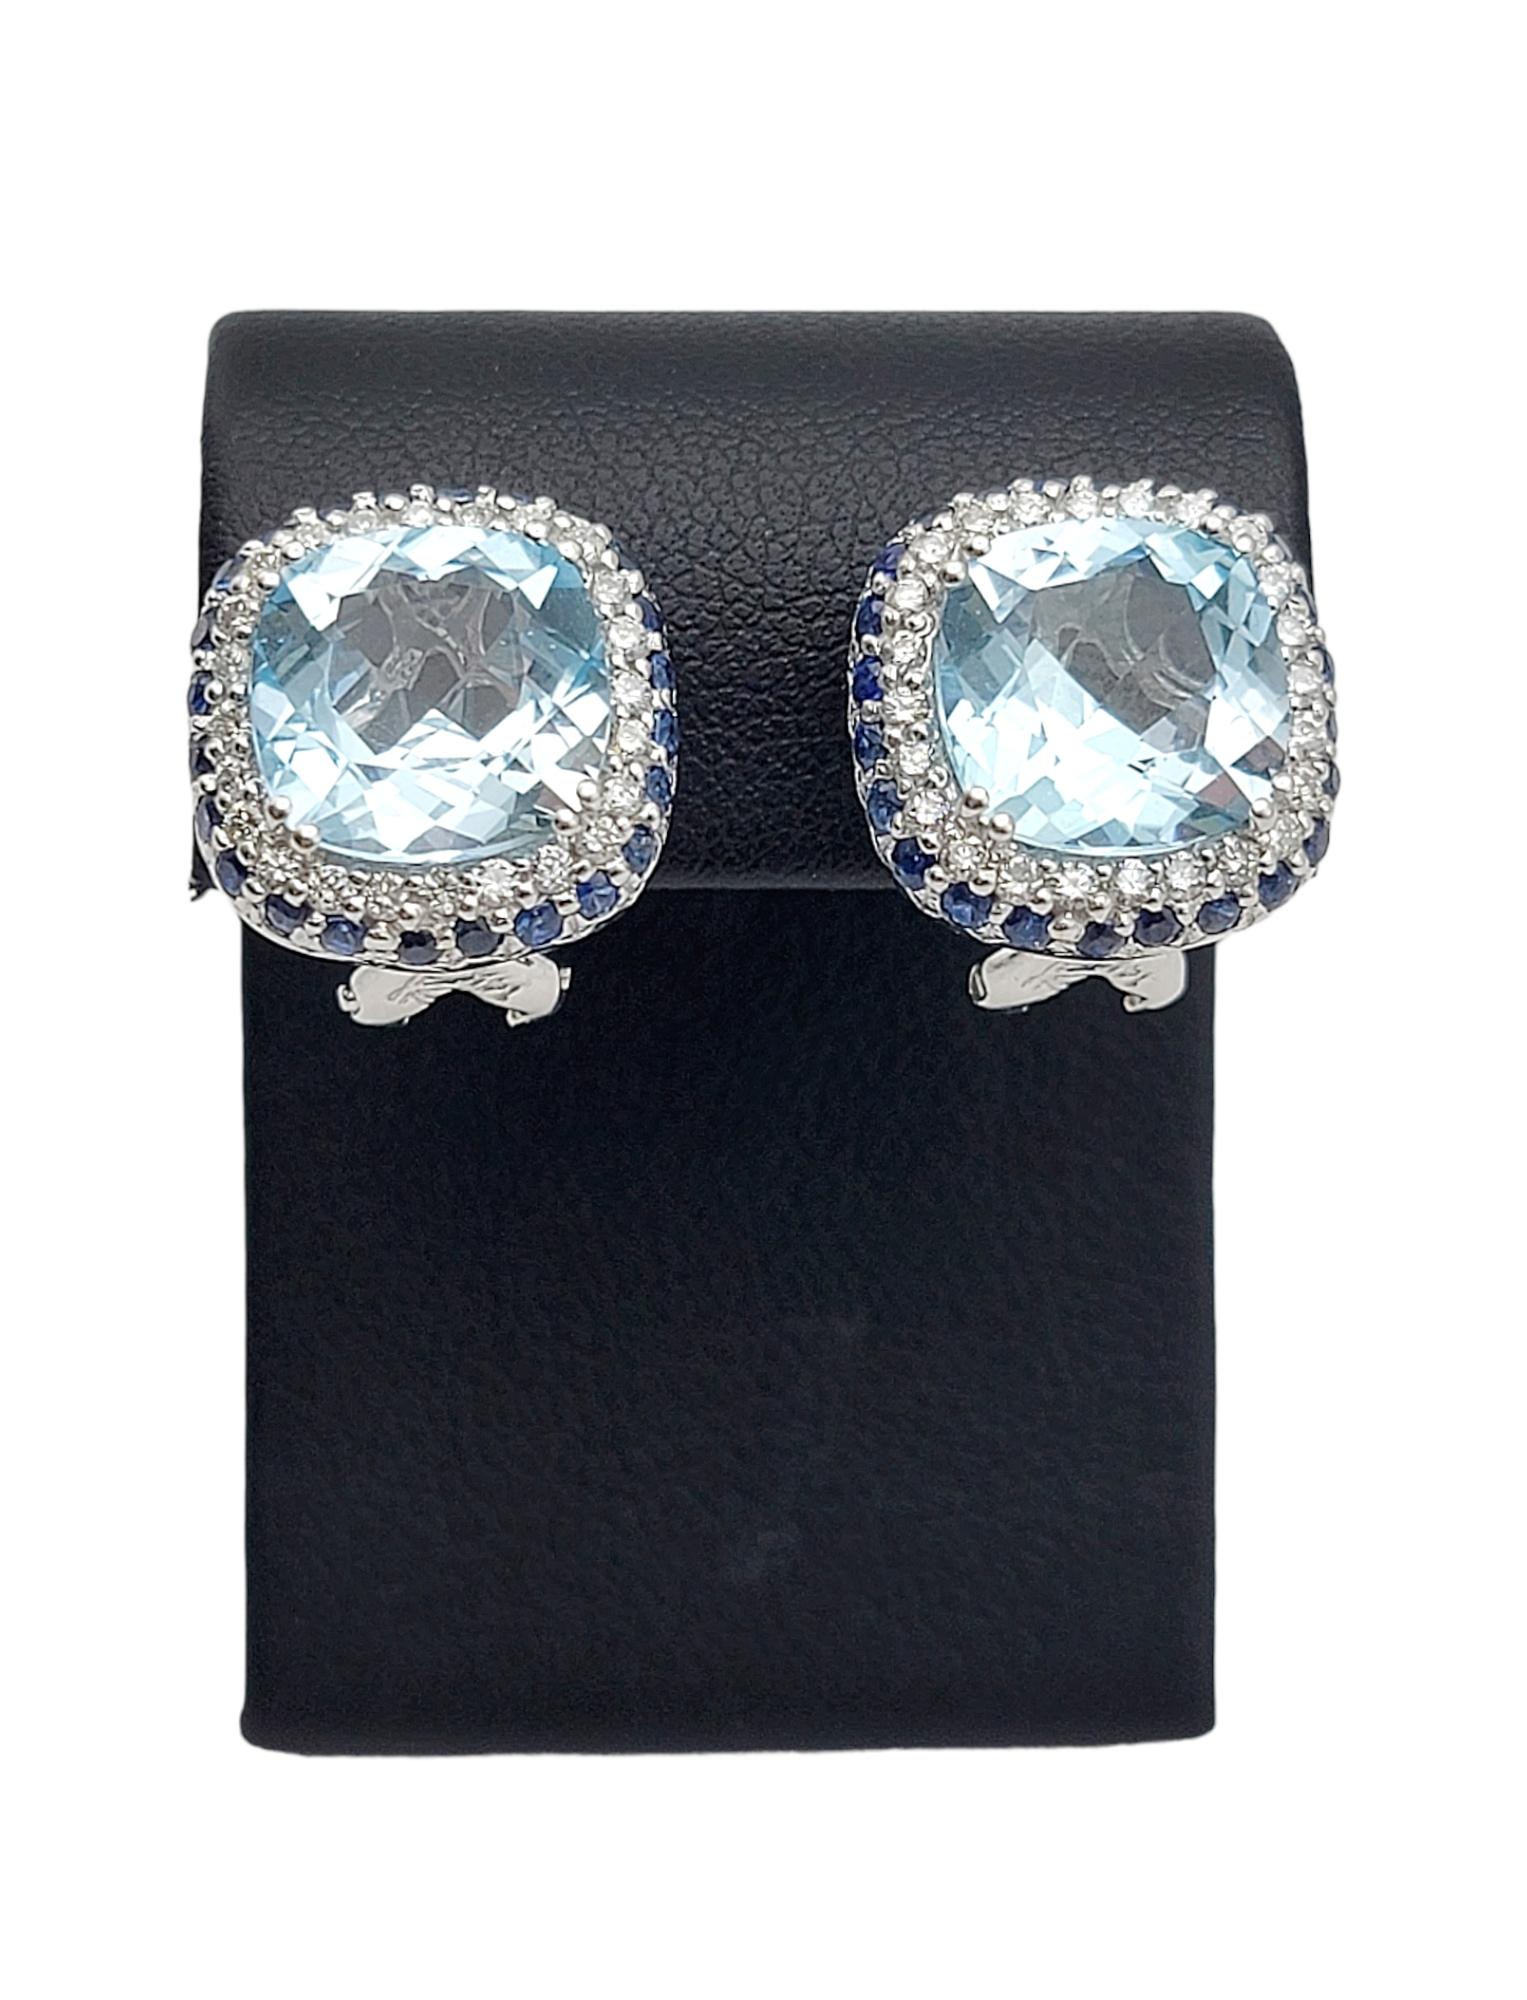 Cushion Cut Blue Topaz, Diamond, & Sapphire Stud Earrings in 14 Karat White Gold For Sale 4